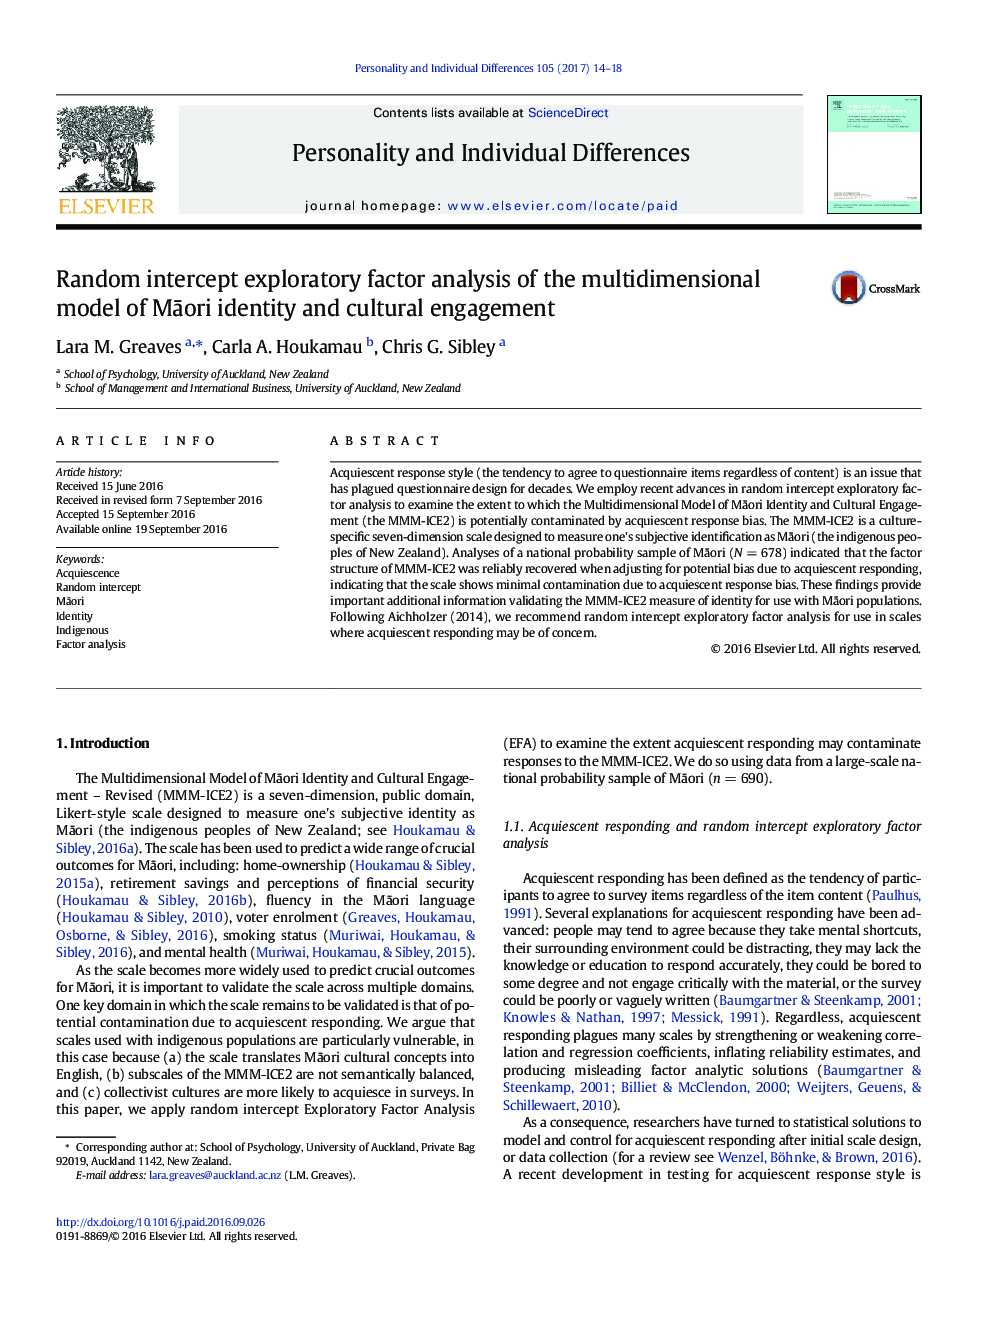 Random intercept exploratory factor analysis of the multidimensional model of MÄori identity and cultural engagement